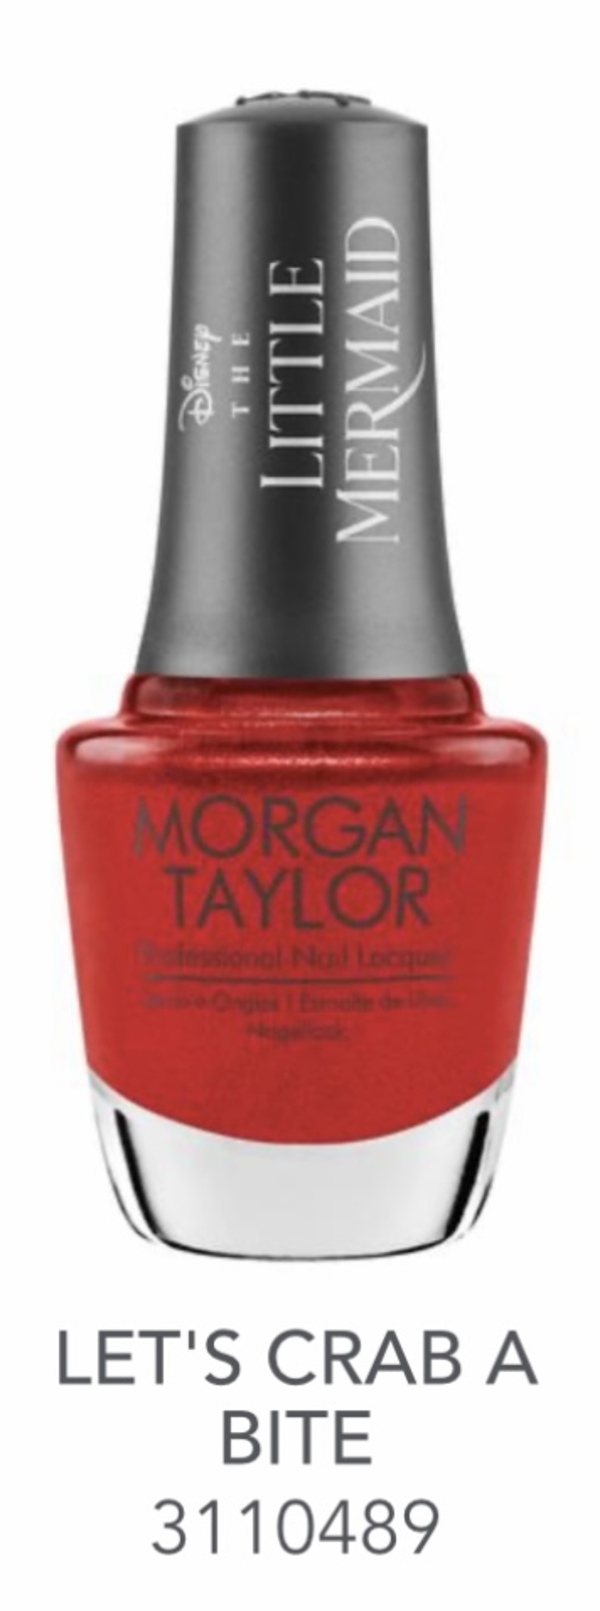 Nail polish swatch / manicure of shade Morgan Taylor Let's Crab A Bite